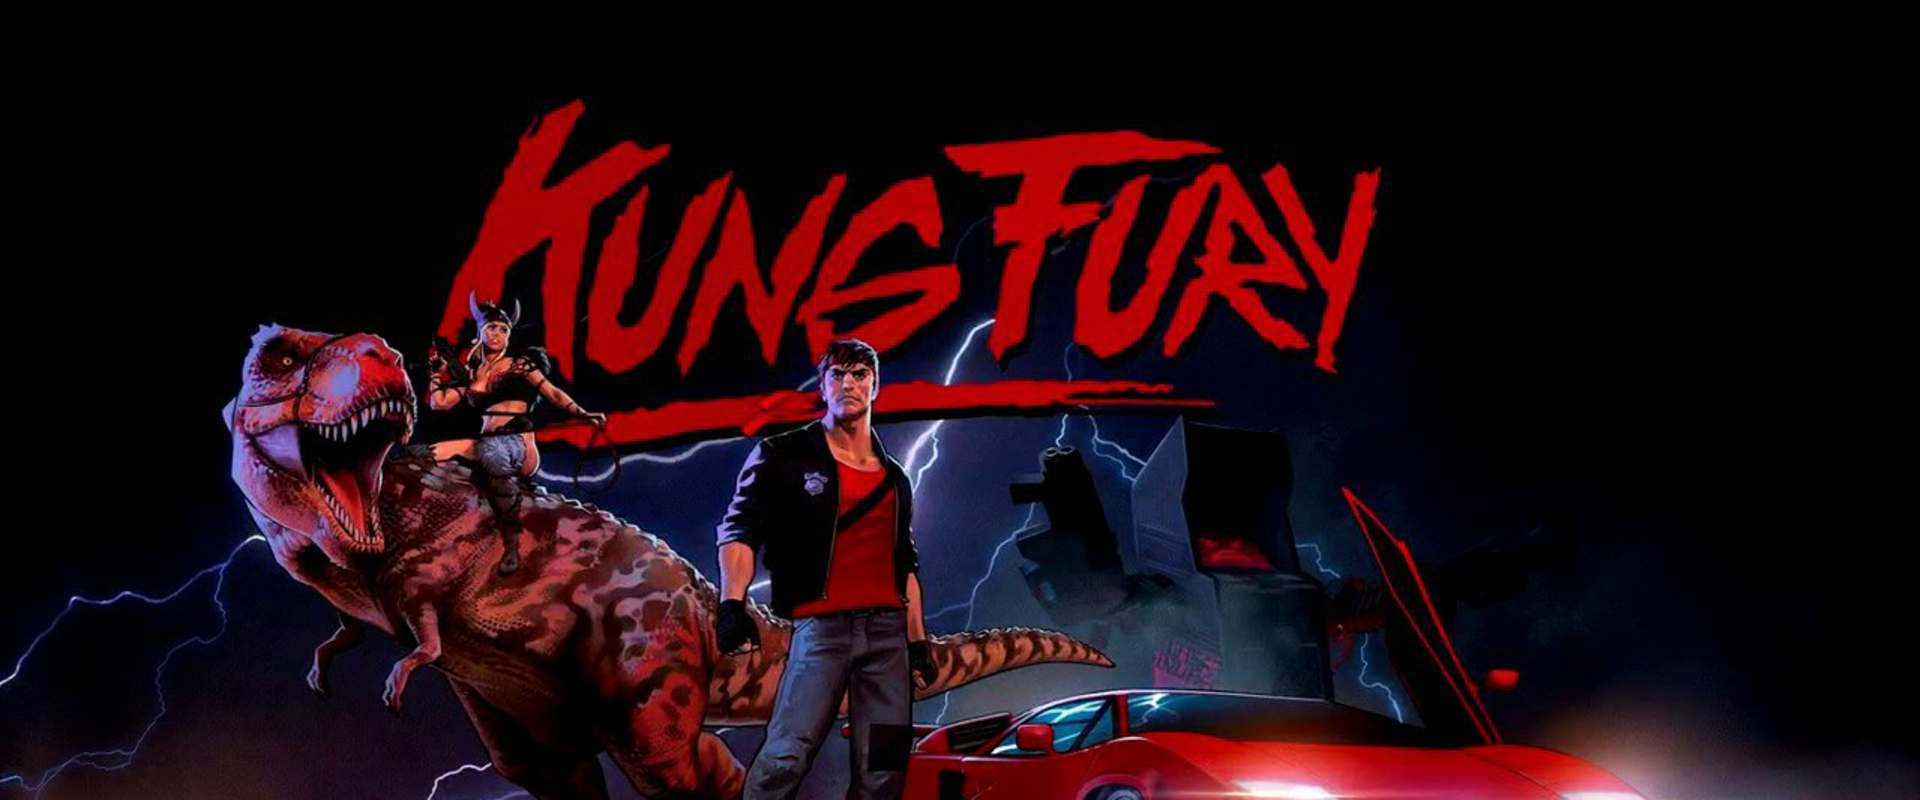 Kung Fury background 2